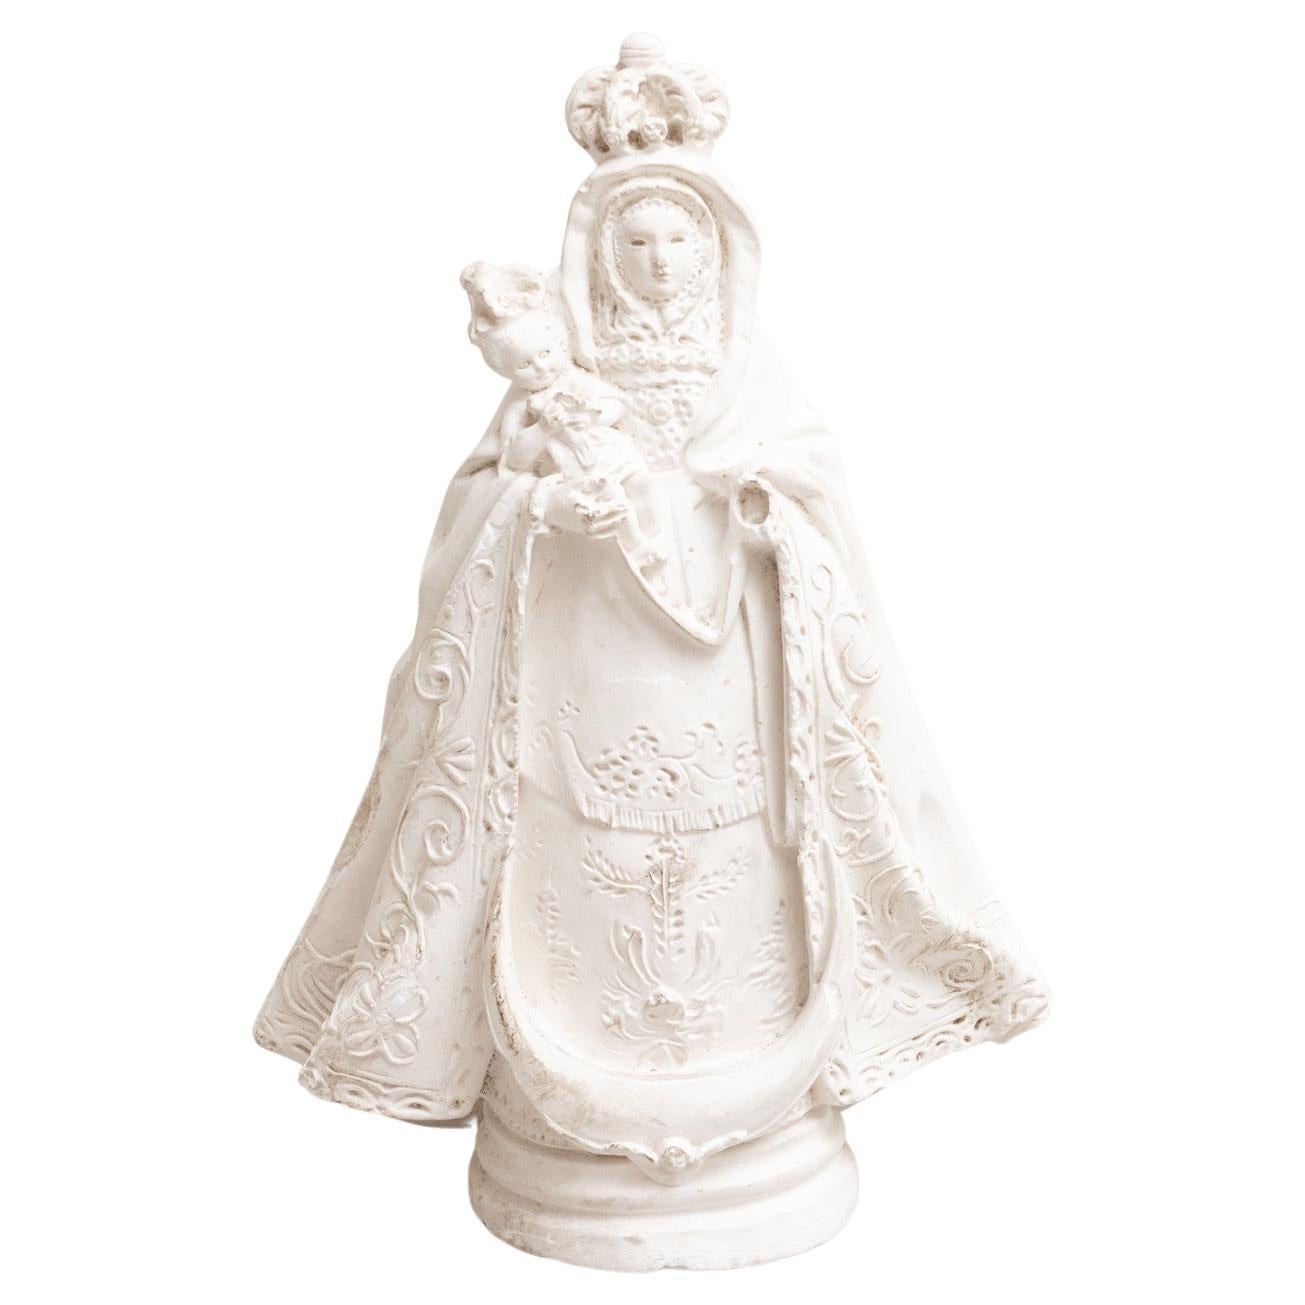 Traditionelle Jungfrauenfigur aus Gips, um 1950